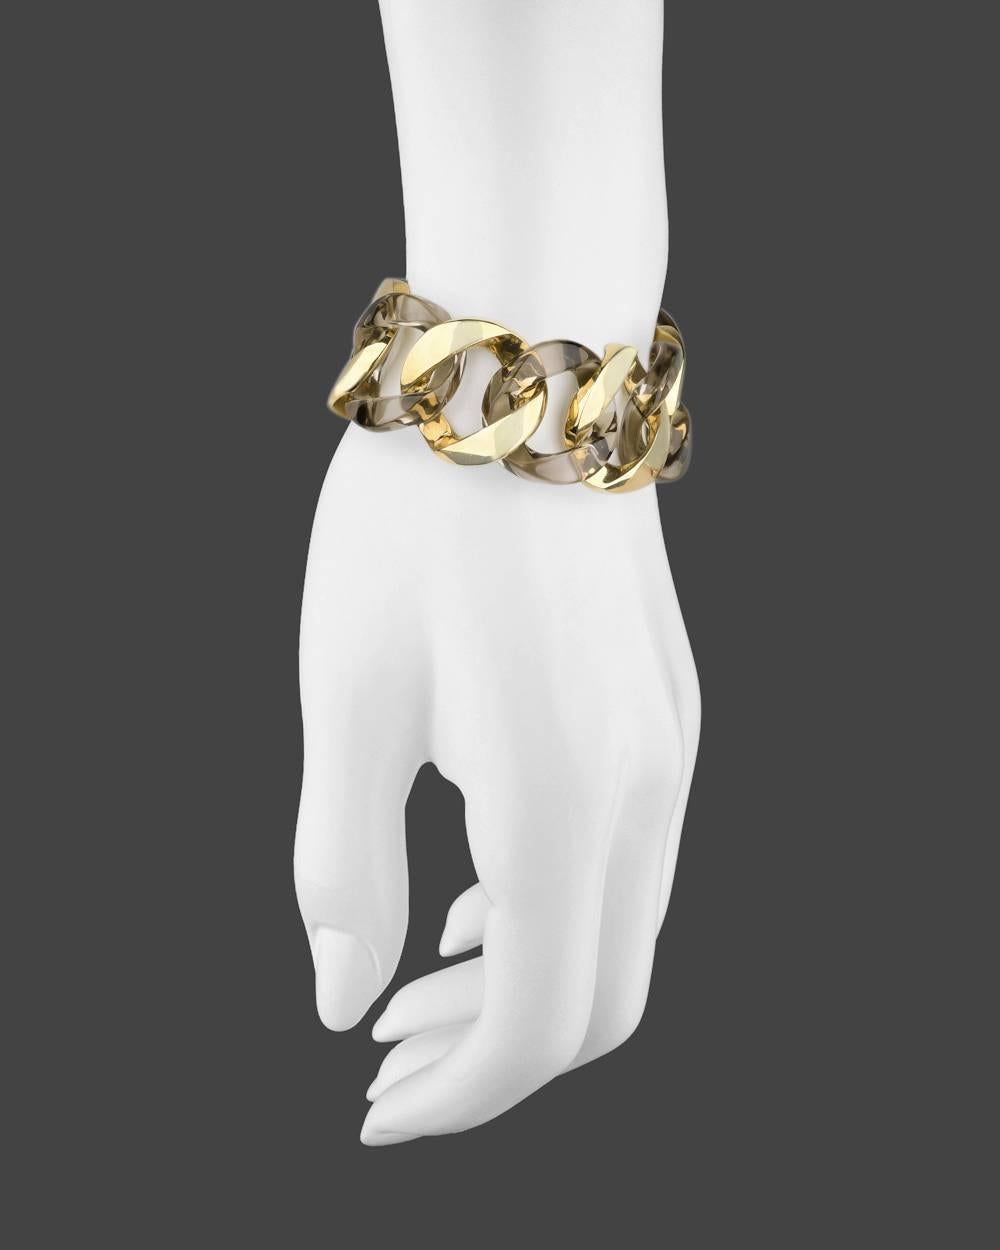 Curb-link bracelet, designed with alternating high-polished 18k yellow gold links and carved smoky quartz links, signed Verdura. 7.5